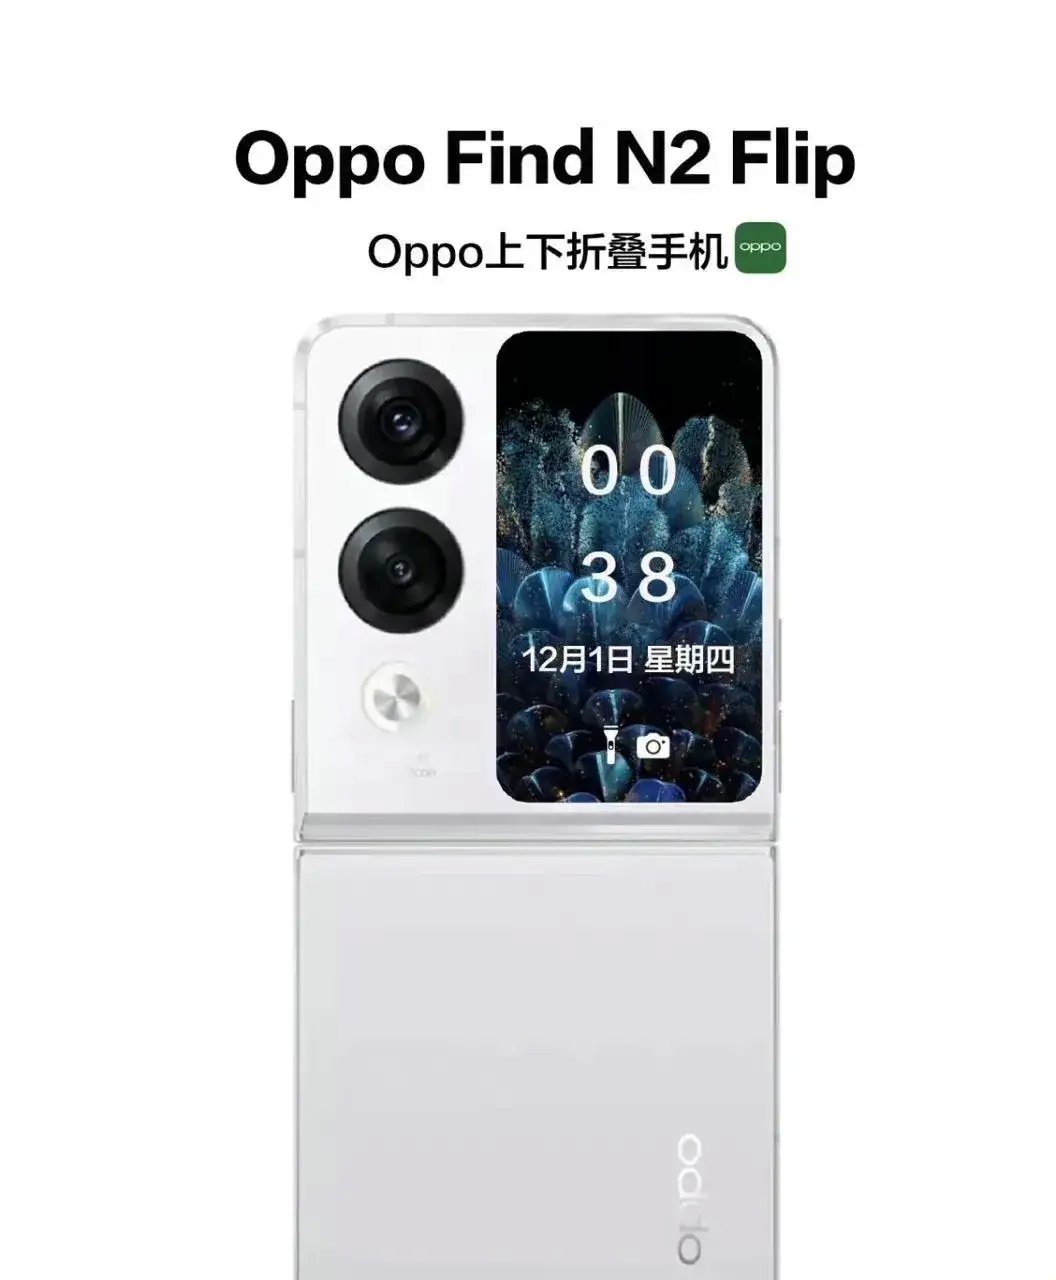 Oppo find n2 flip filtrado